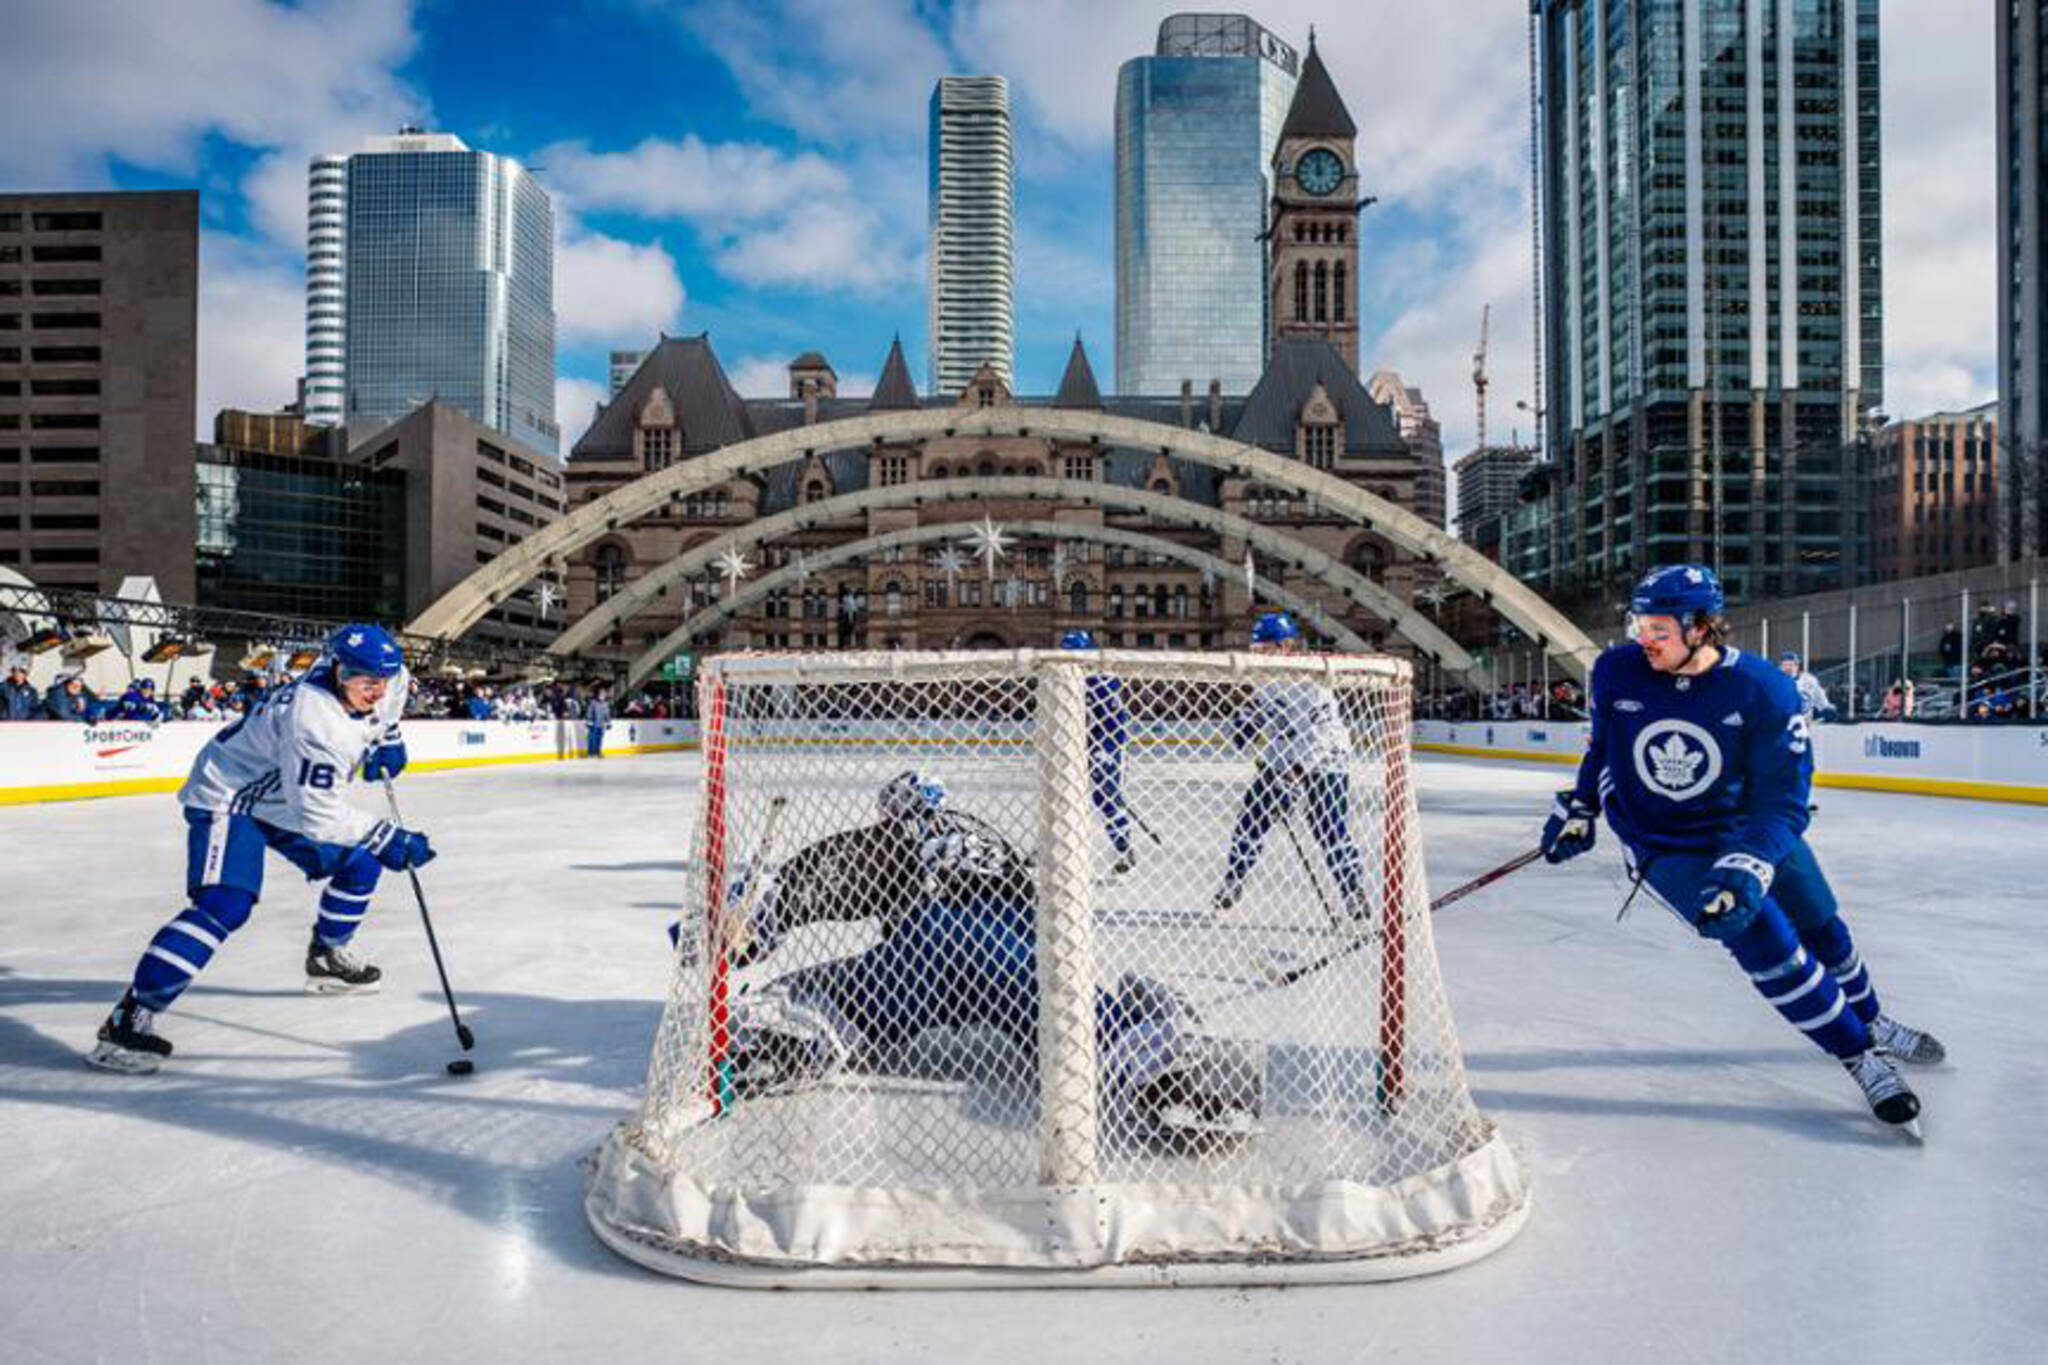 Toronto Maple Leafs - The Sport Chek Outdoor Practice happens on